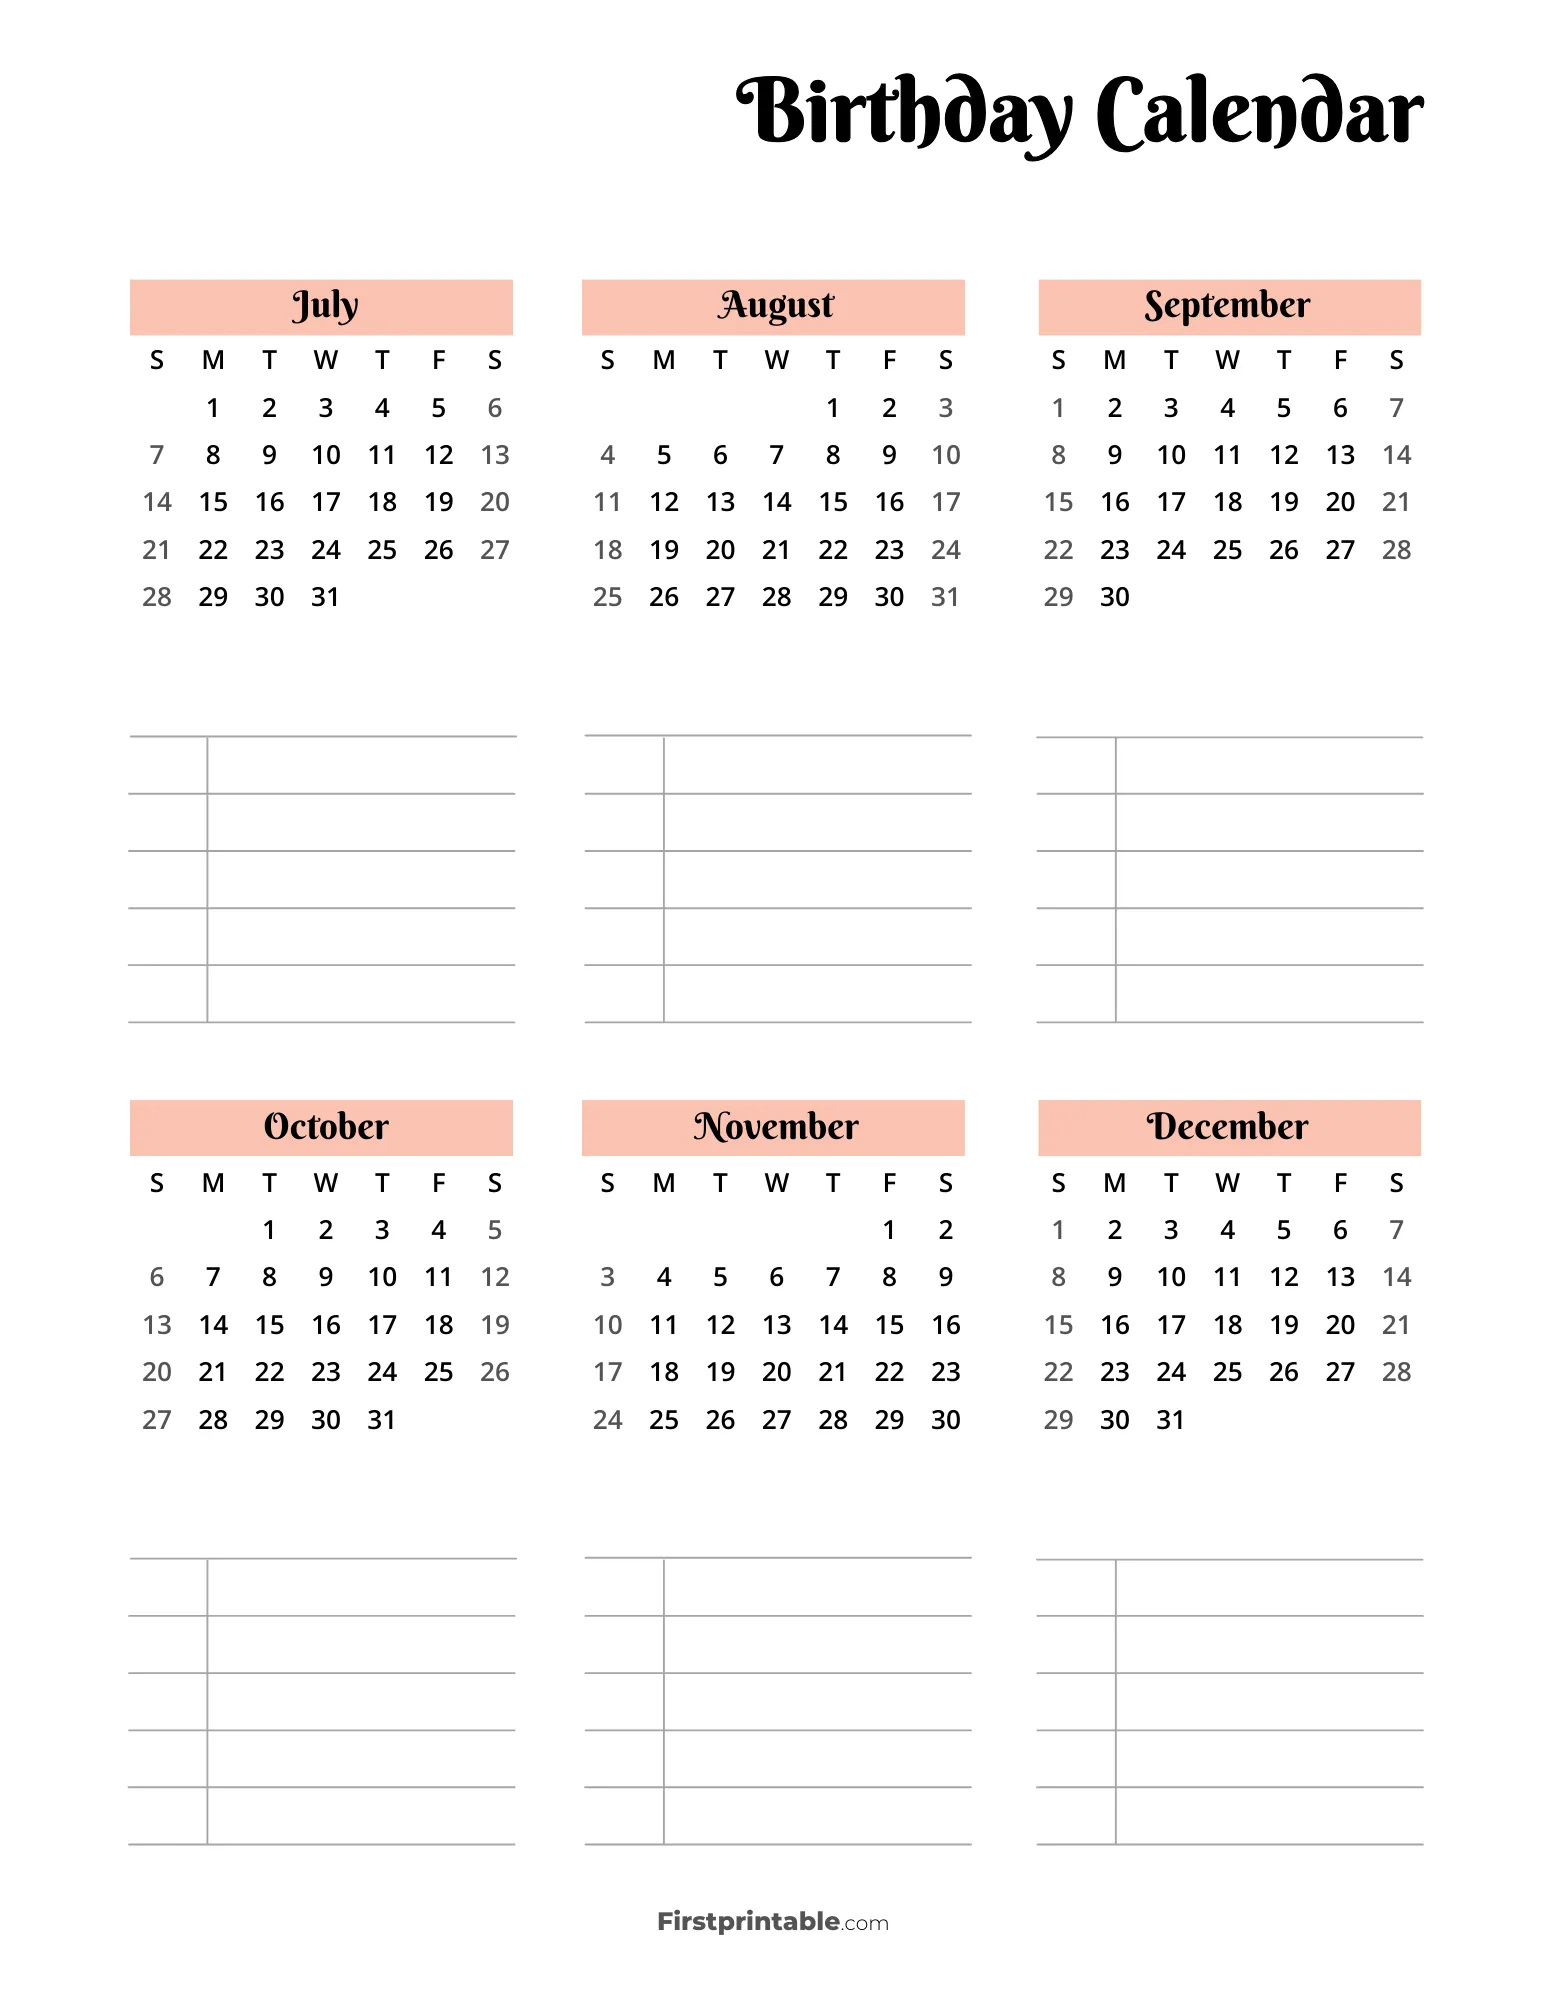 Birthday Calendar Printable Template 02 (2)